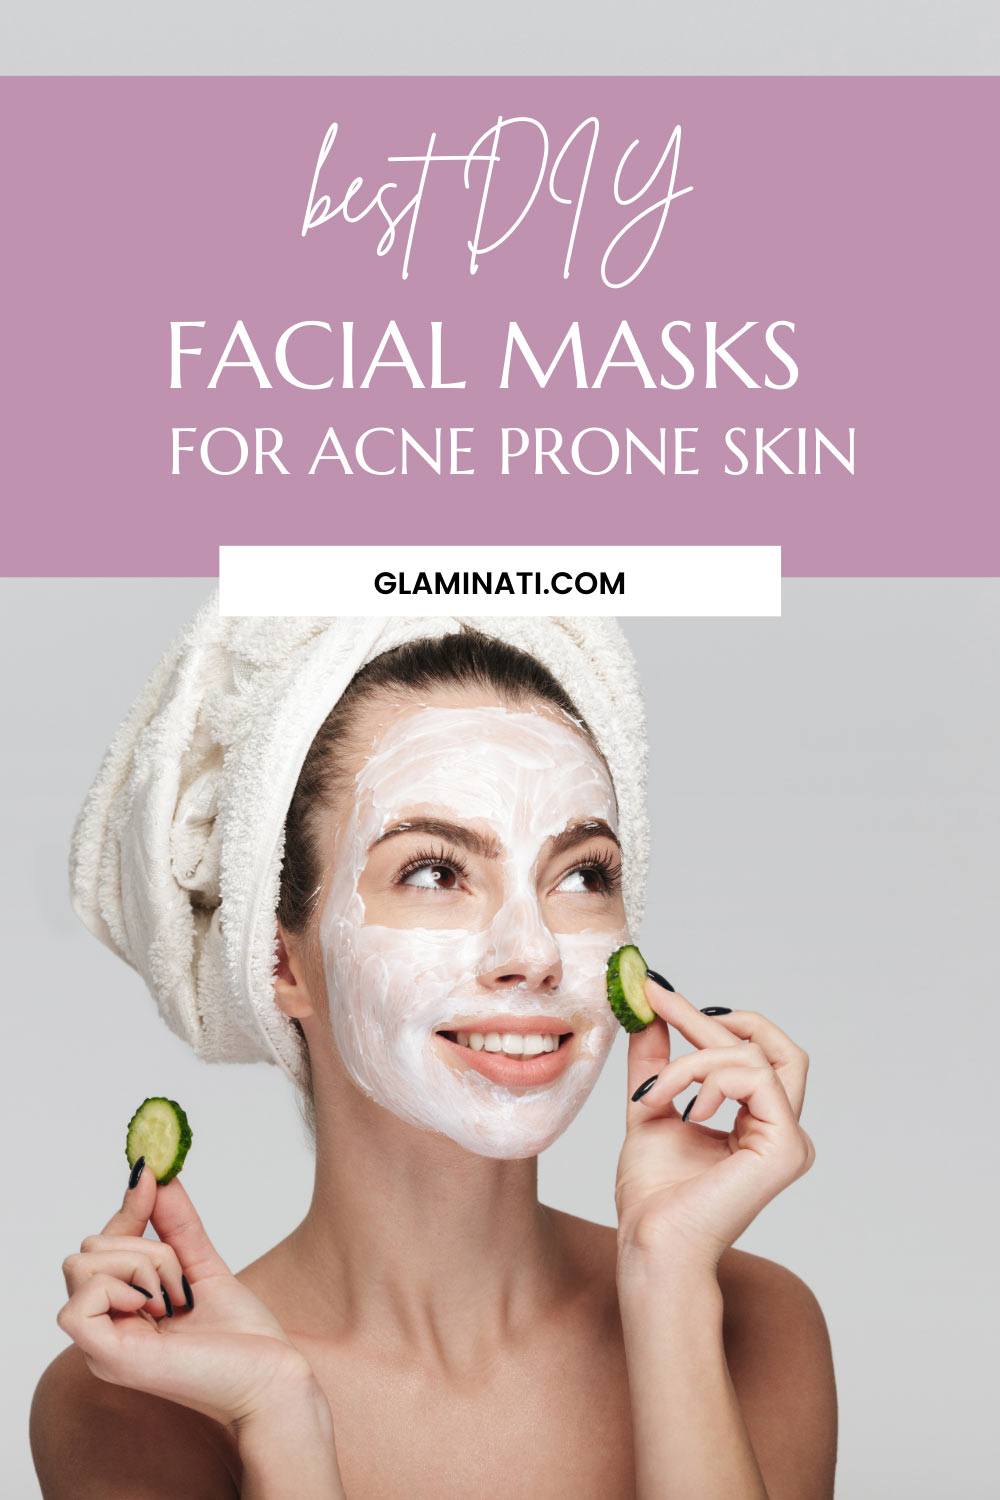 10 Best Diy Facial Masks For Acne Prone Skin 5612